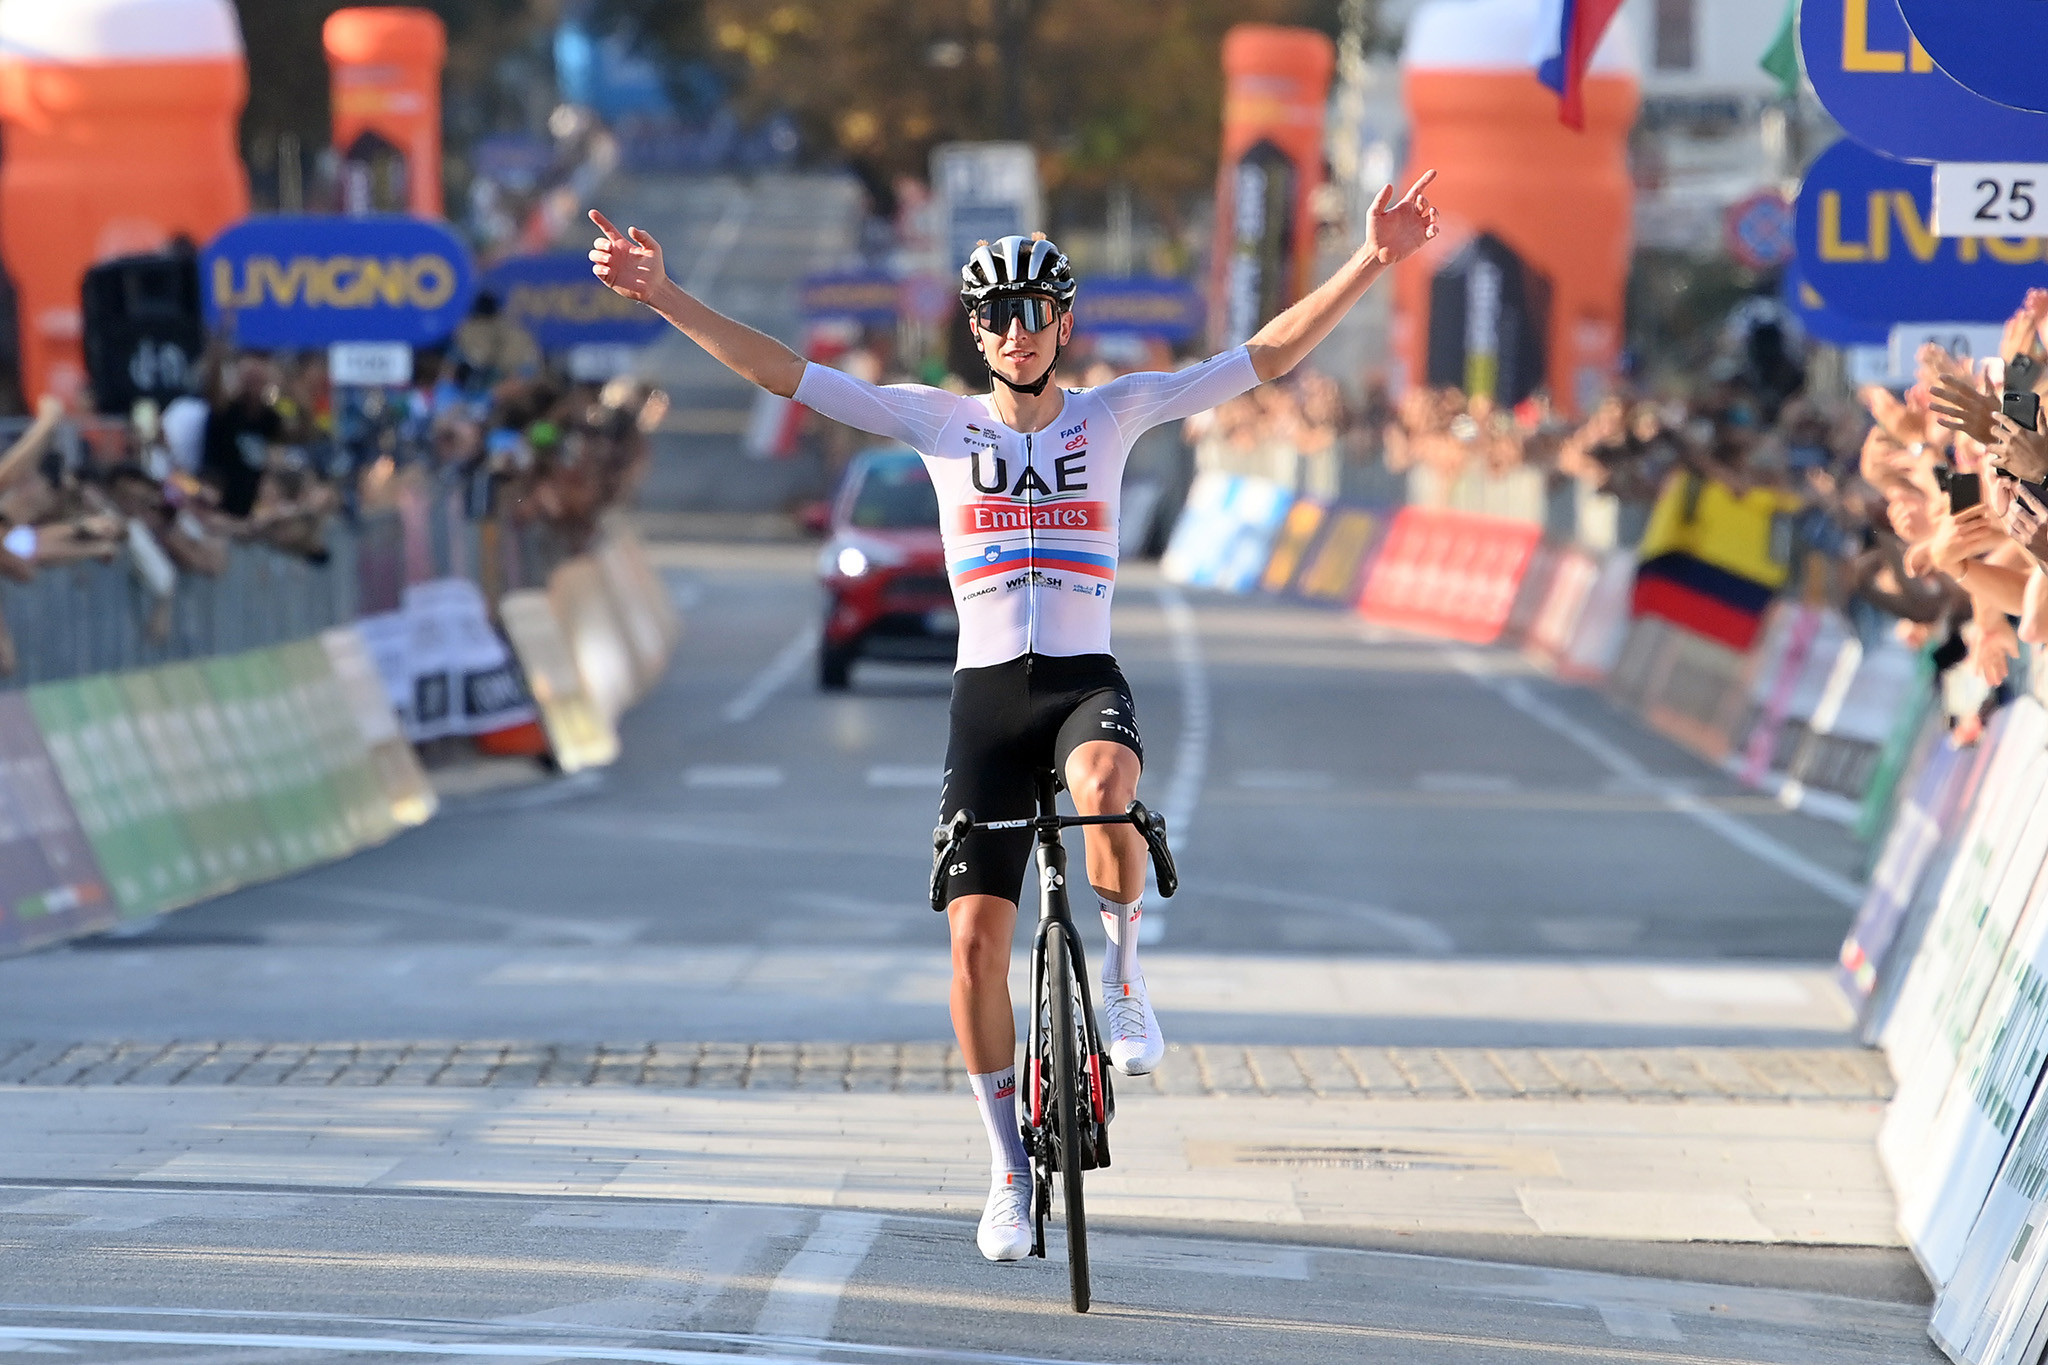 Pogačar celebrates "dream" triumph as he wins third consecutive Il Lombardia title